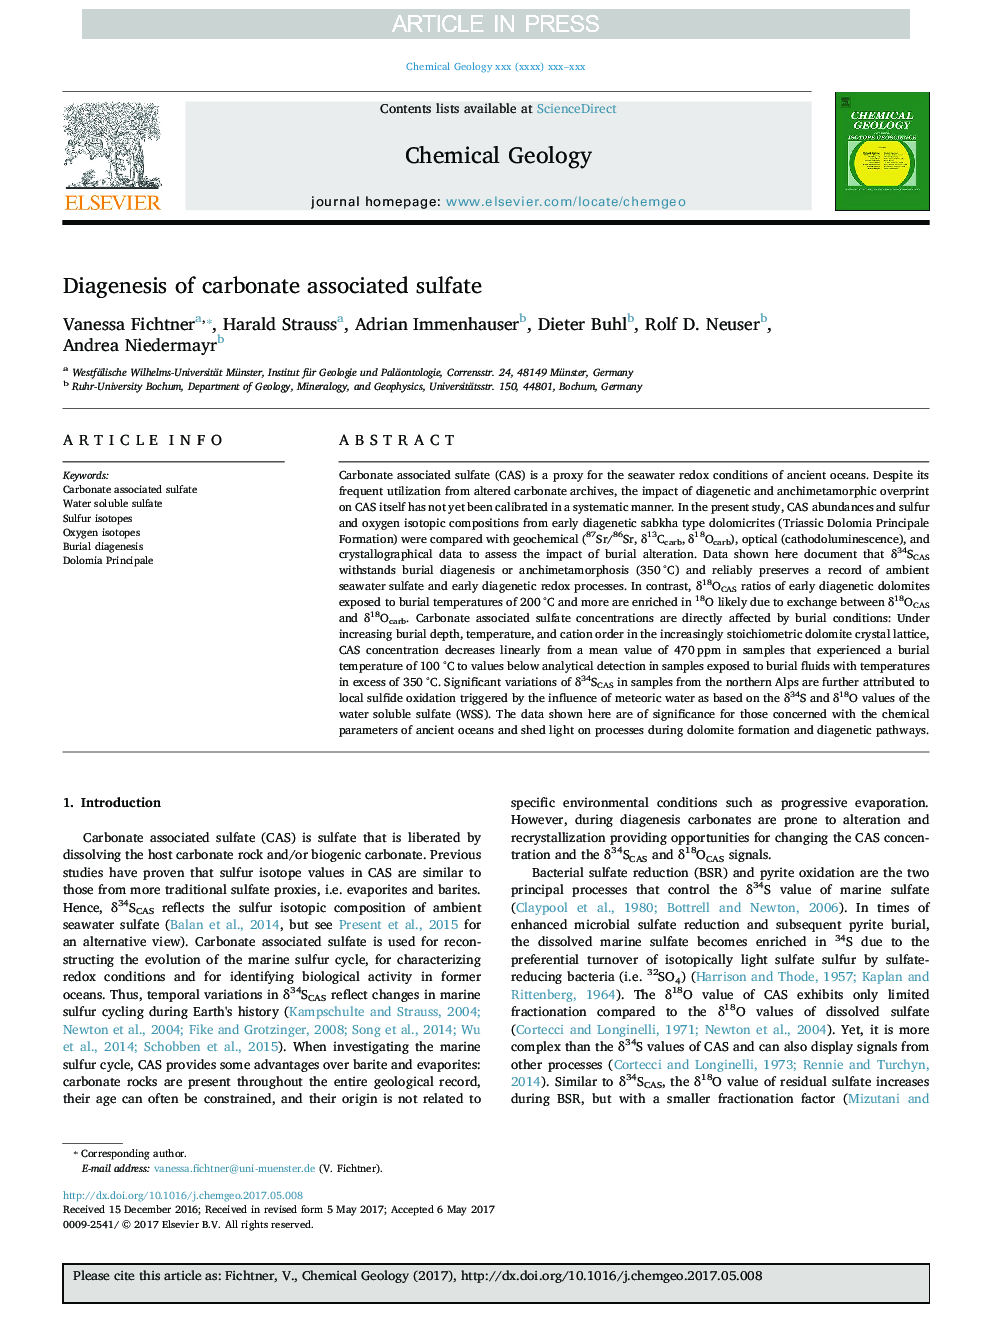 Diagenesis of carbonate associated sulfate